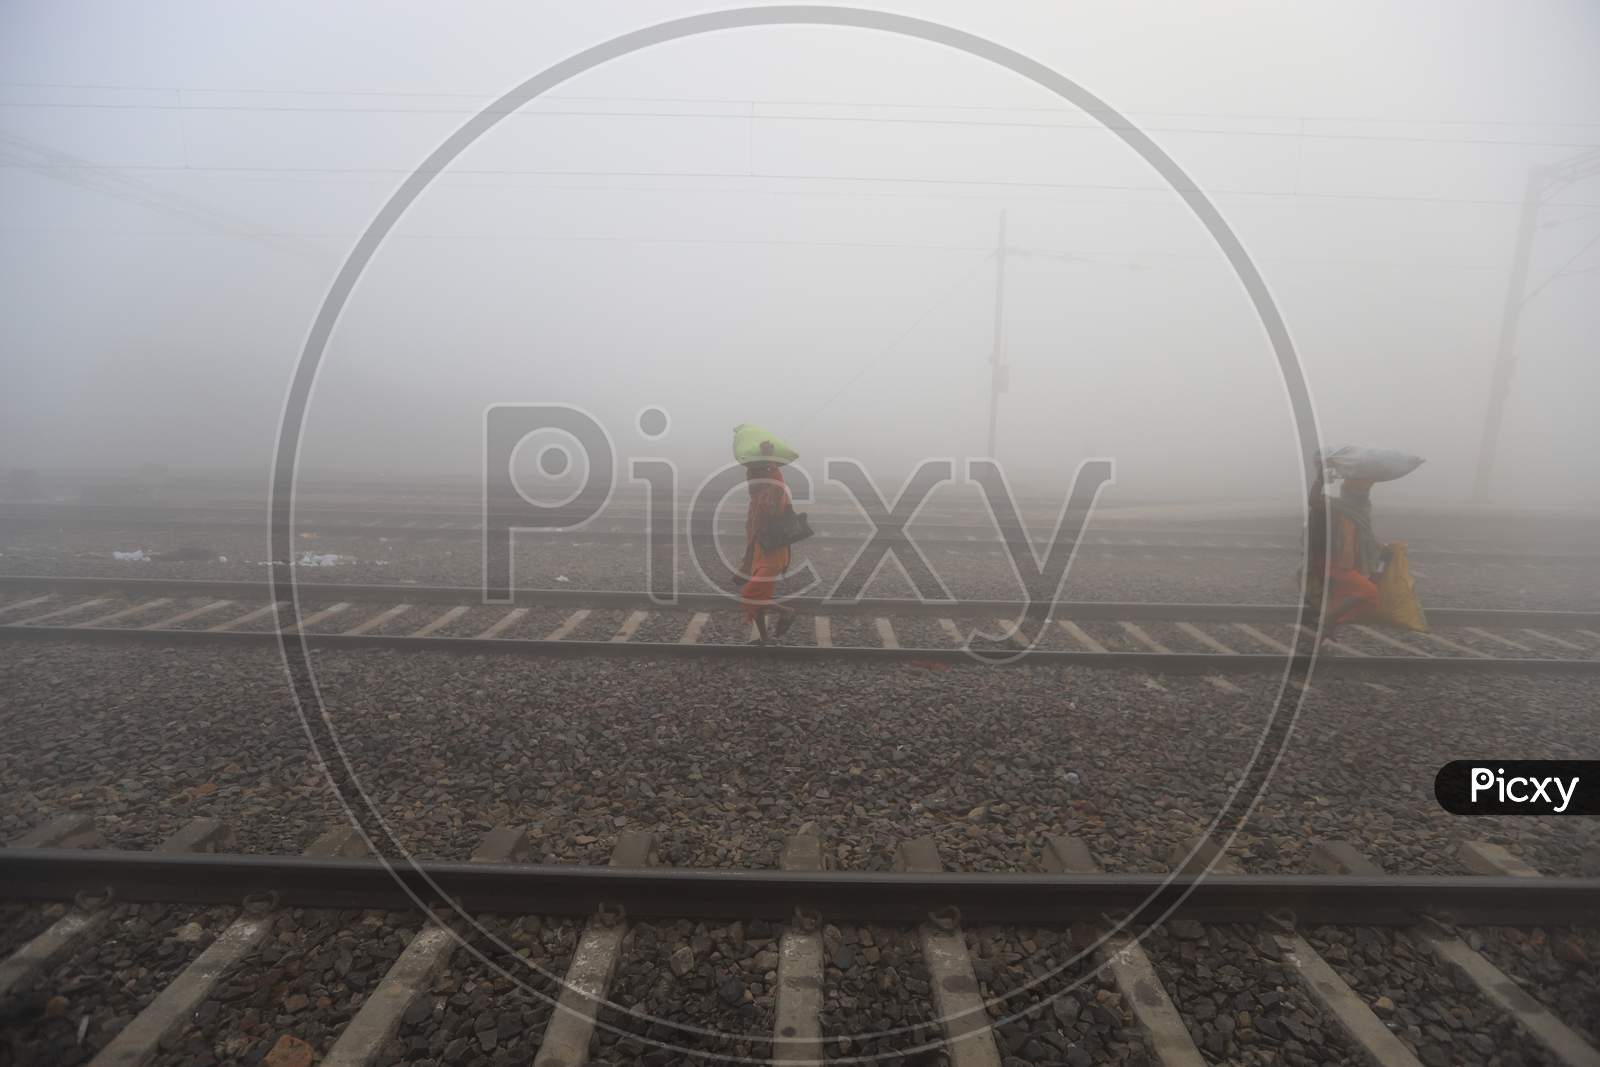 Passengers in an Railway Station Platform In an Misty Winter Morning